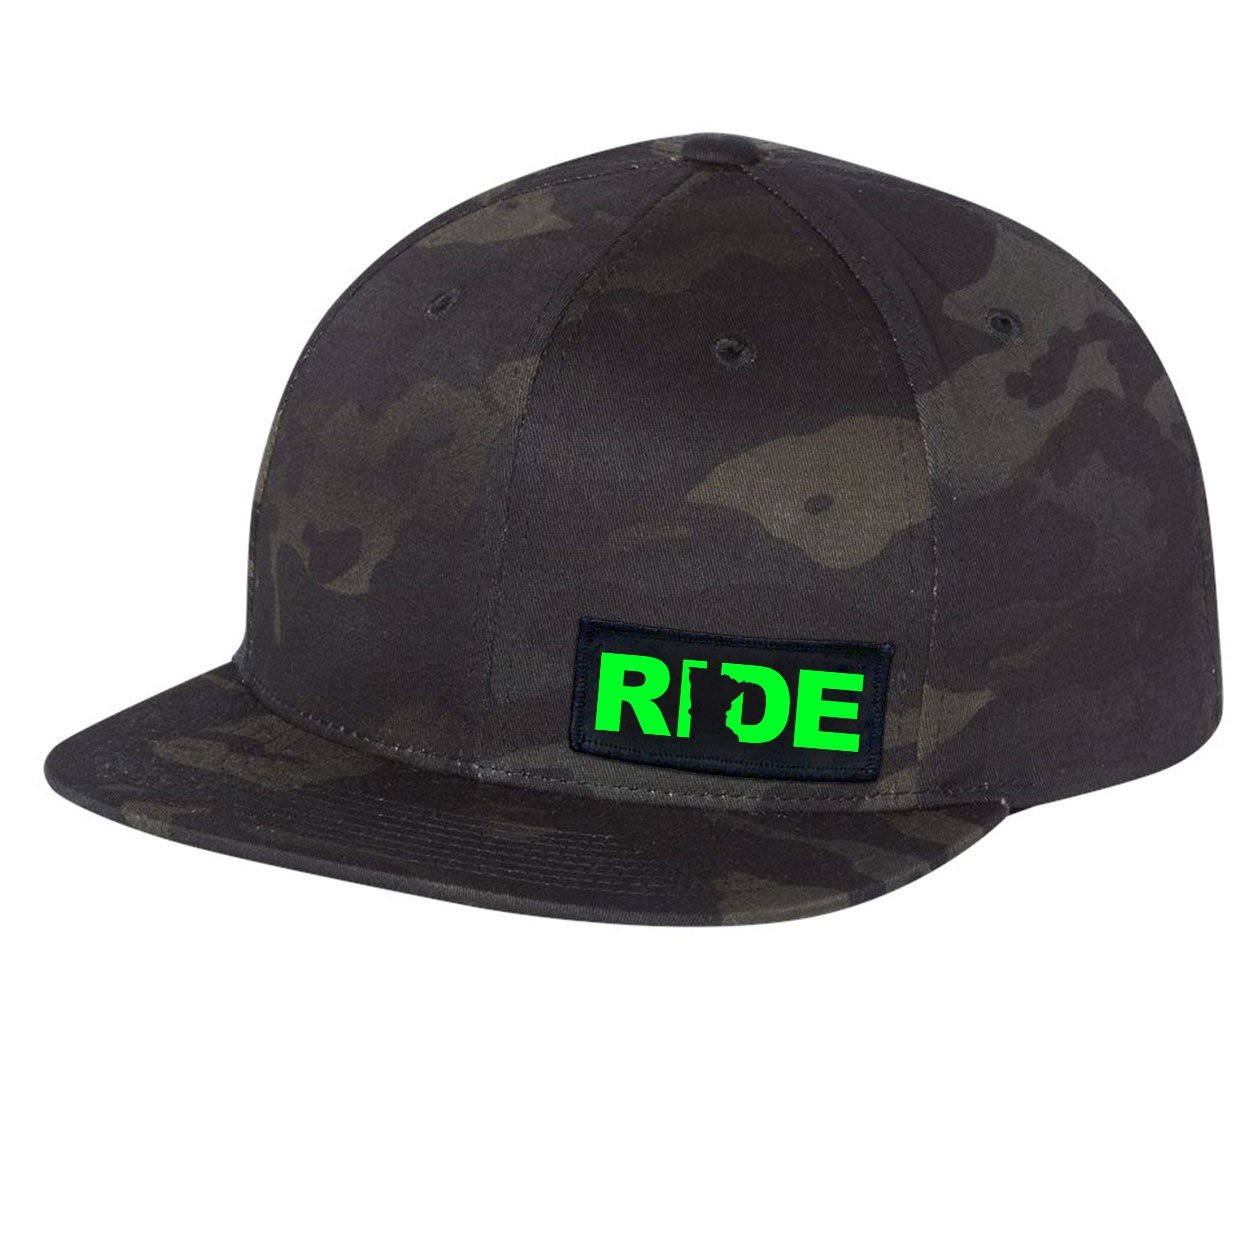 Ride Minnesota Night Out Woven Patch Flat Brim Snapback Hat Black Camo (Green Logo)